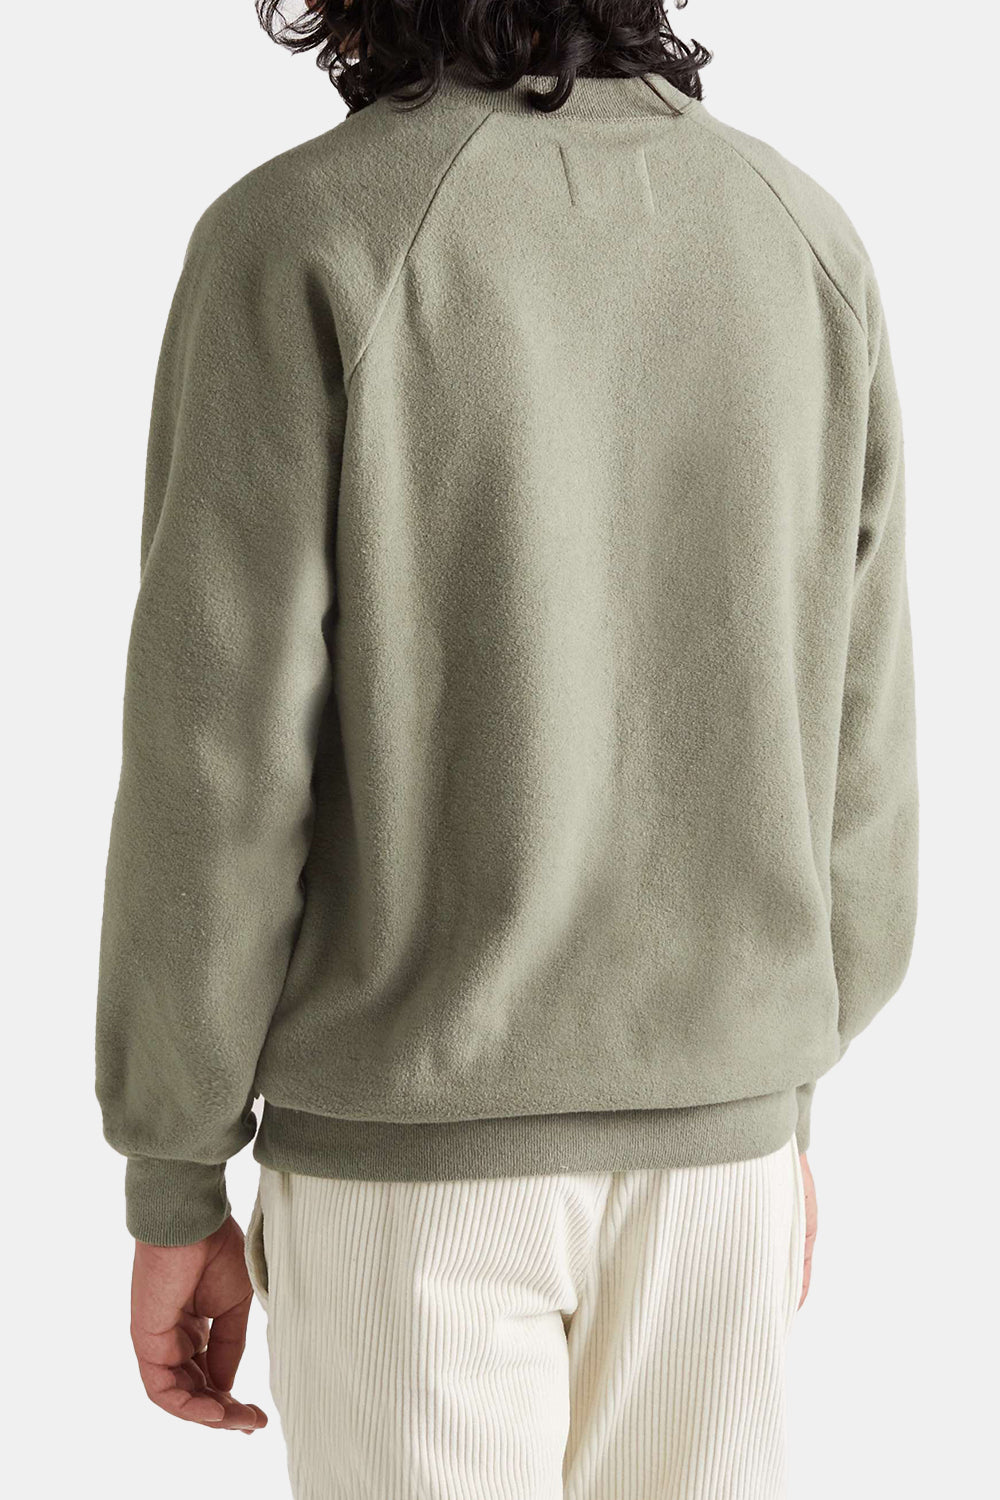 La Paz Cunha Sweatshirt (Military Green Fleece)